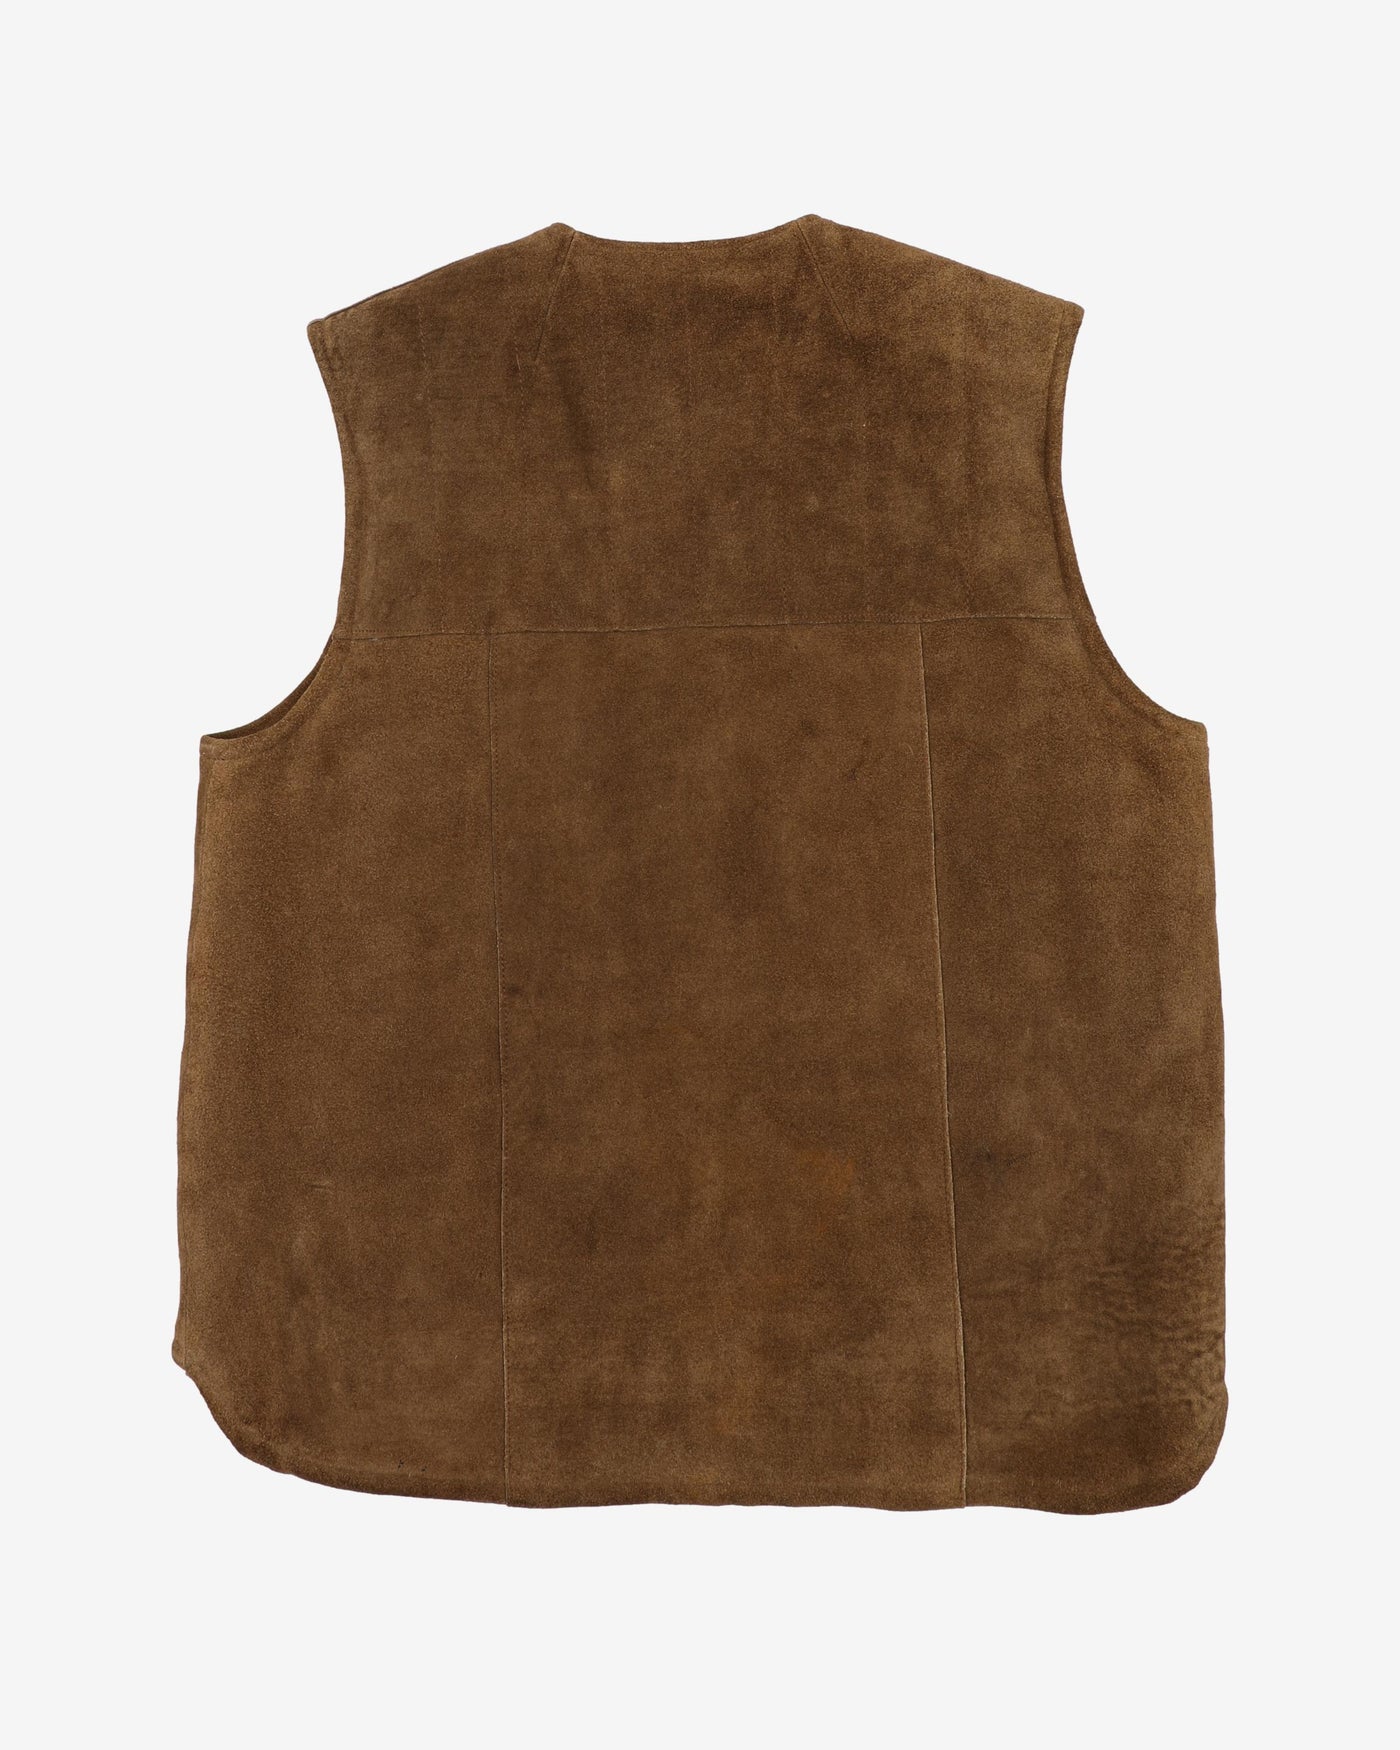 Brown Suede Fur Lined Gilet Waistcoat - S